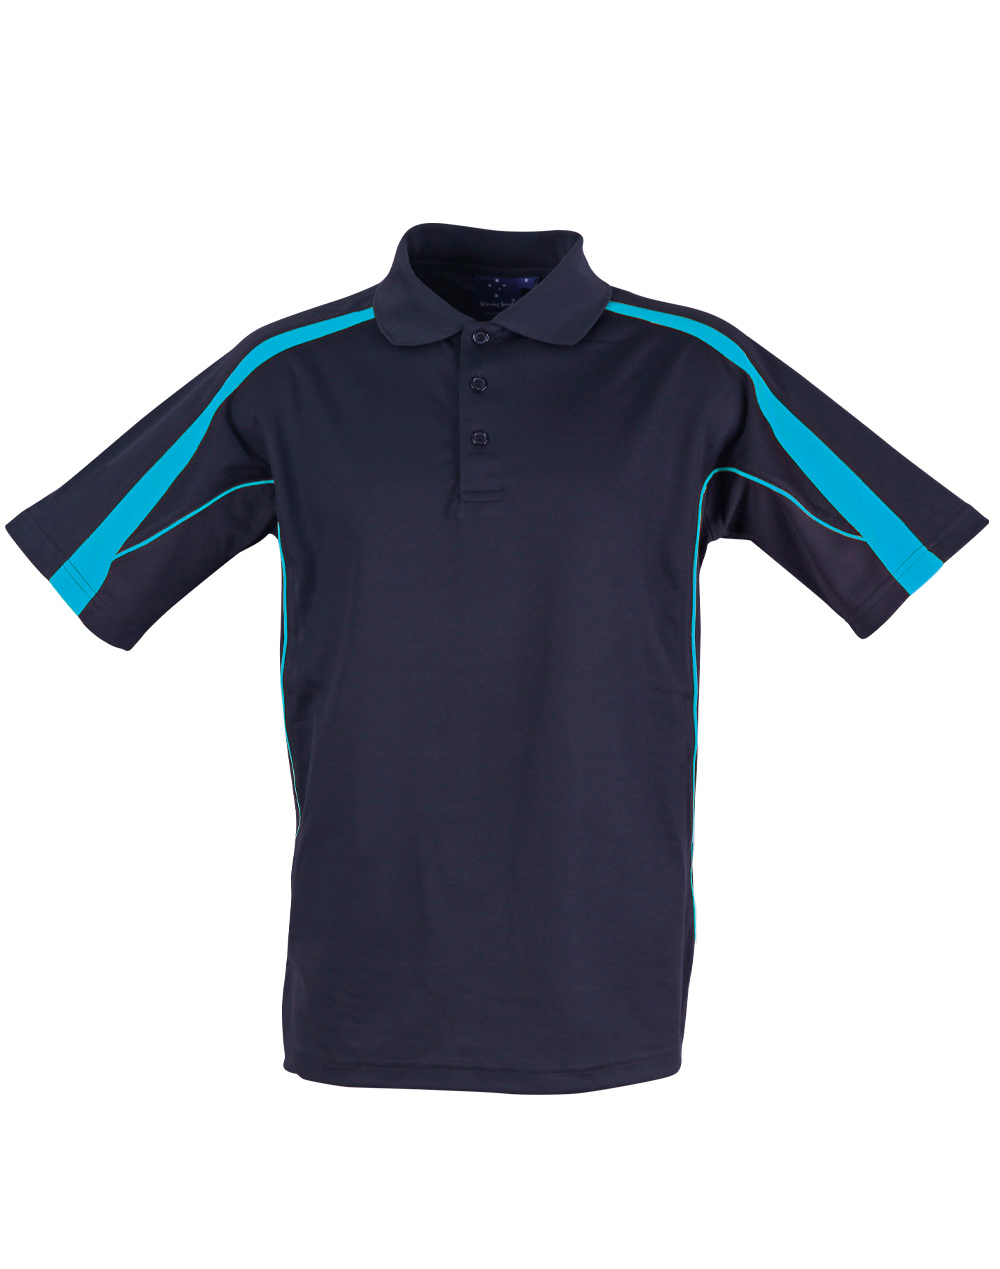 Custom (Navy Red) Legend Polo Shirts for Men Online Perth Australia